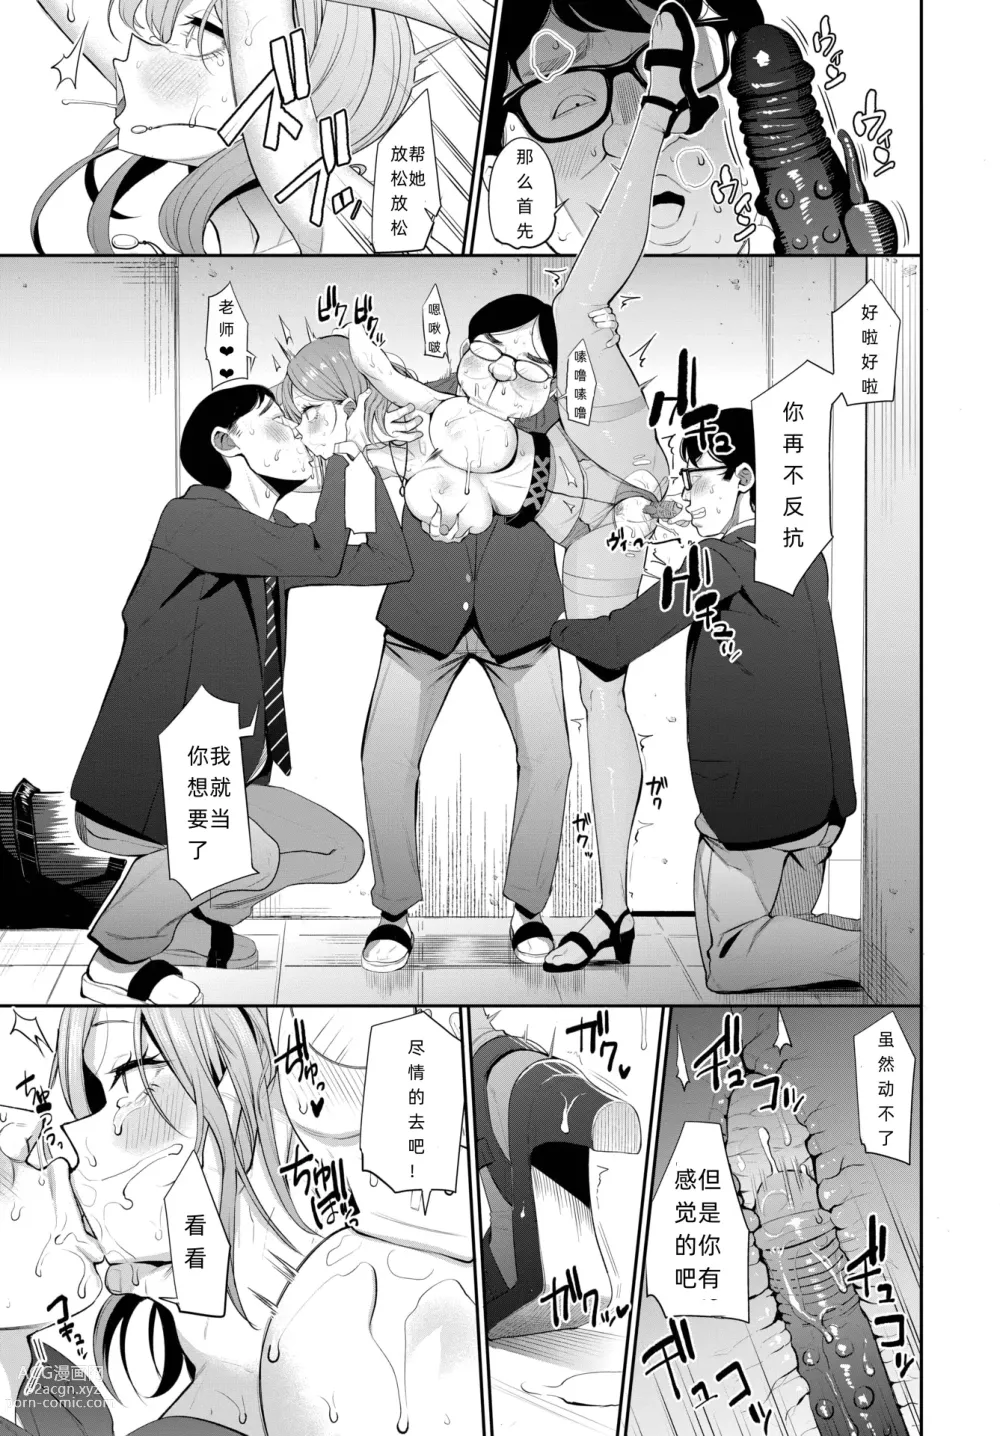 Page 7 of manga Nikutai Teishi ~Caste Teihen no Revenge~